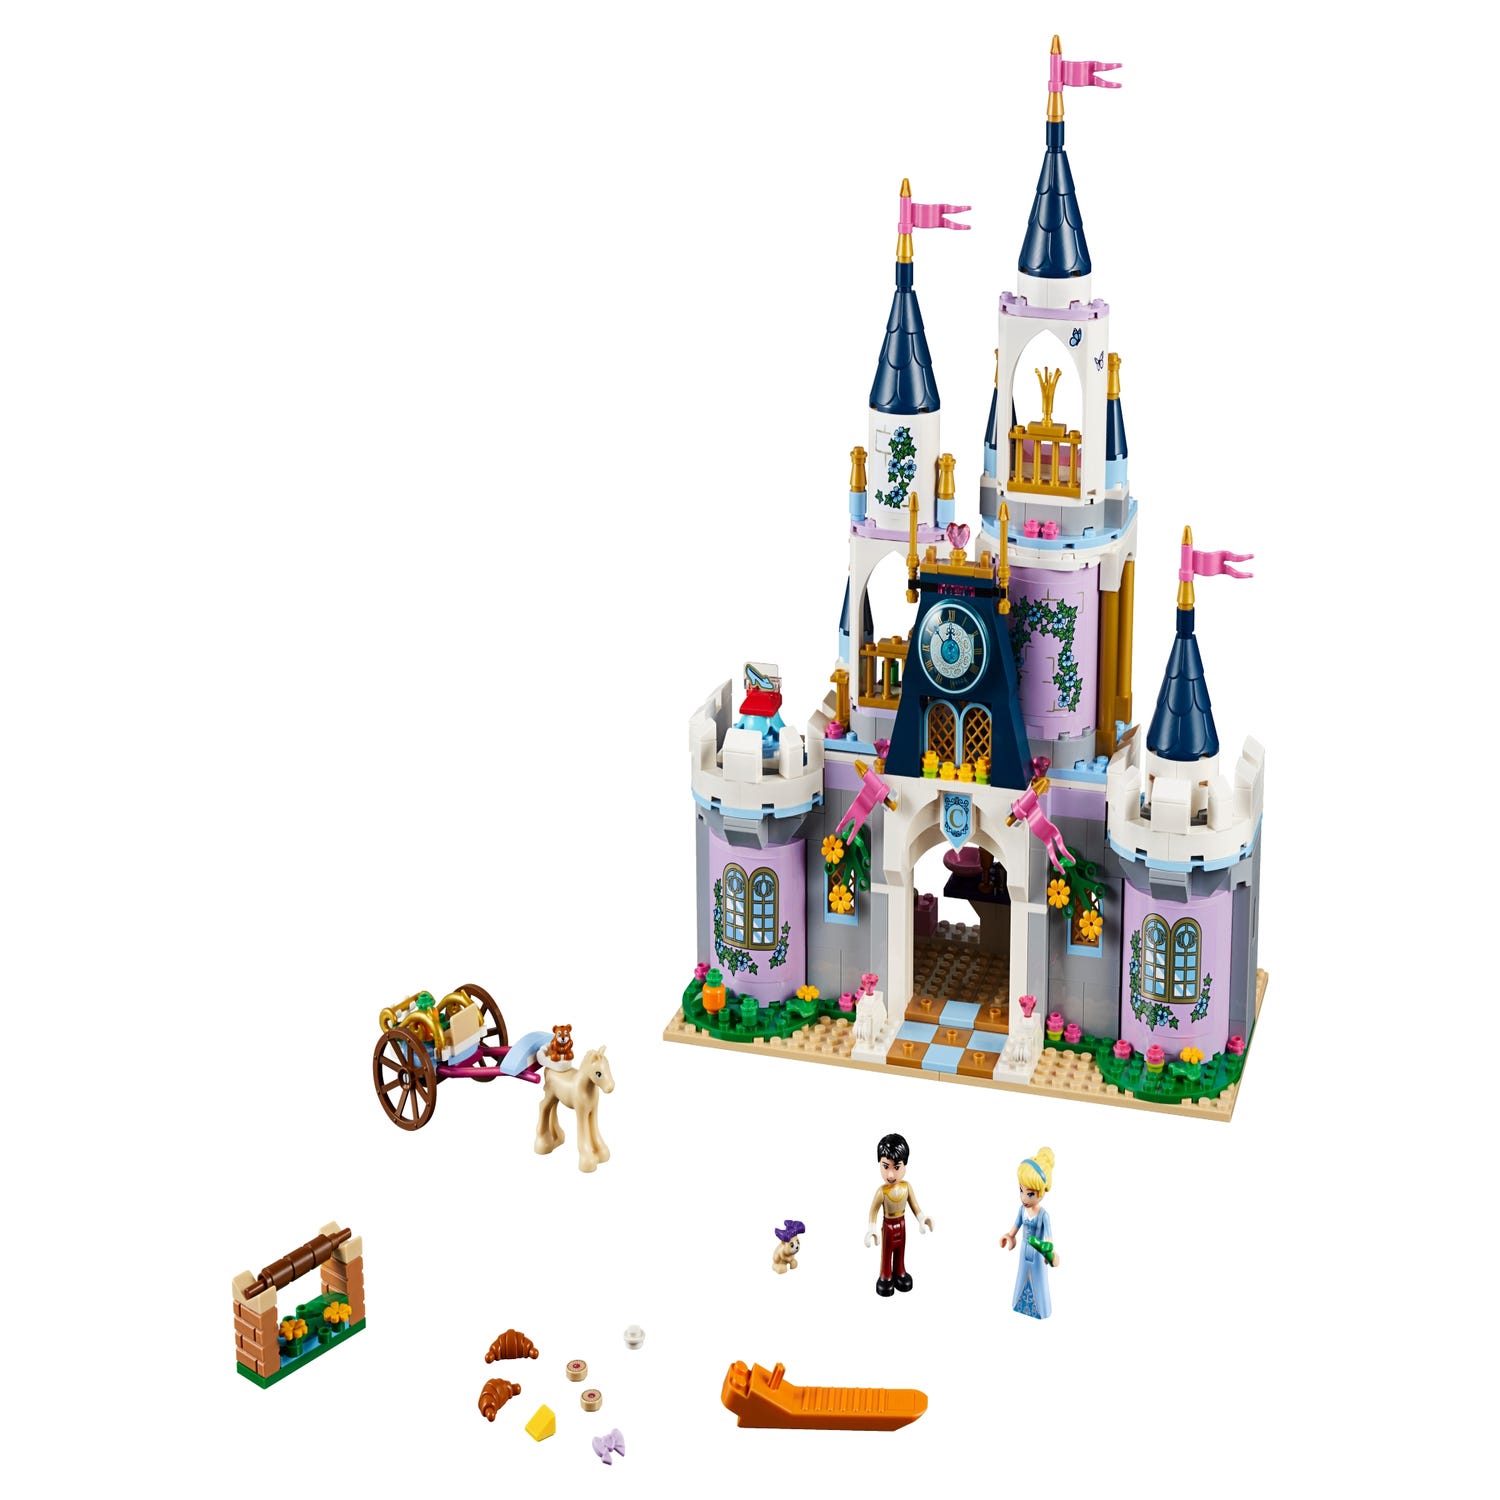 Palads kasket ild Askepots drømmeslot 41154 | Disney™ | Officiel LEGO® Shop DK